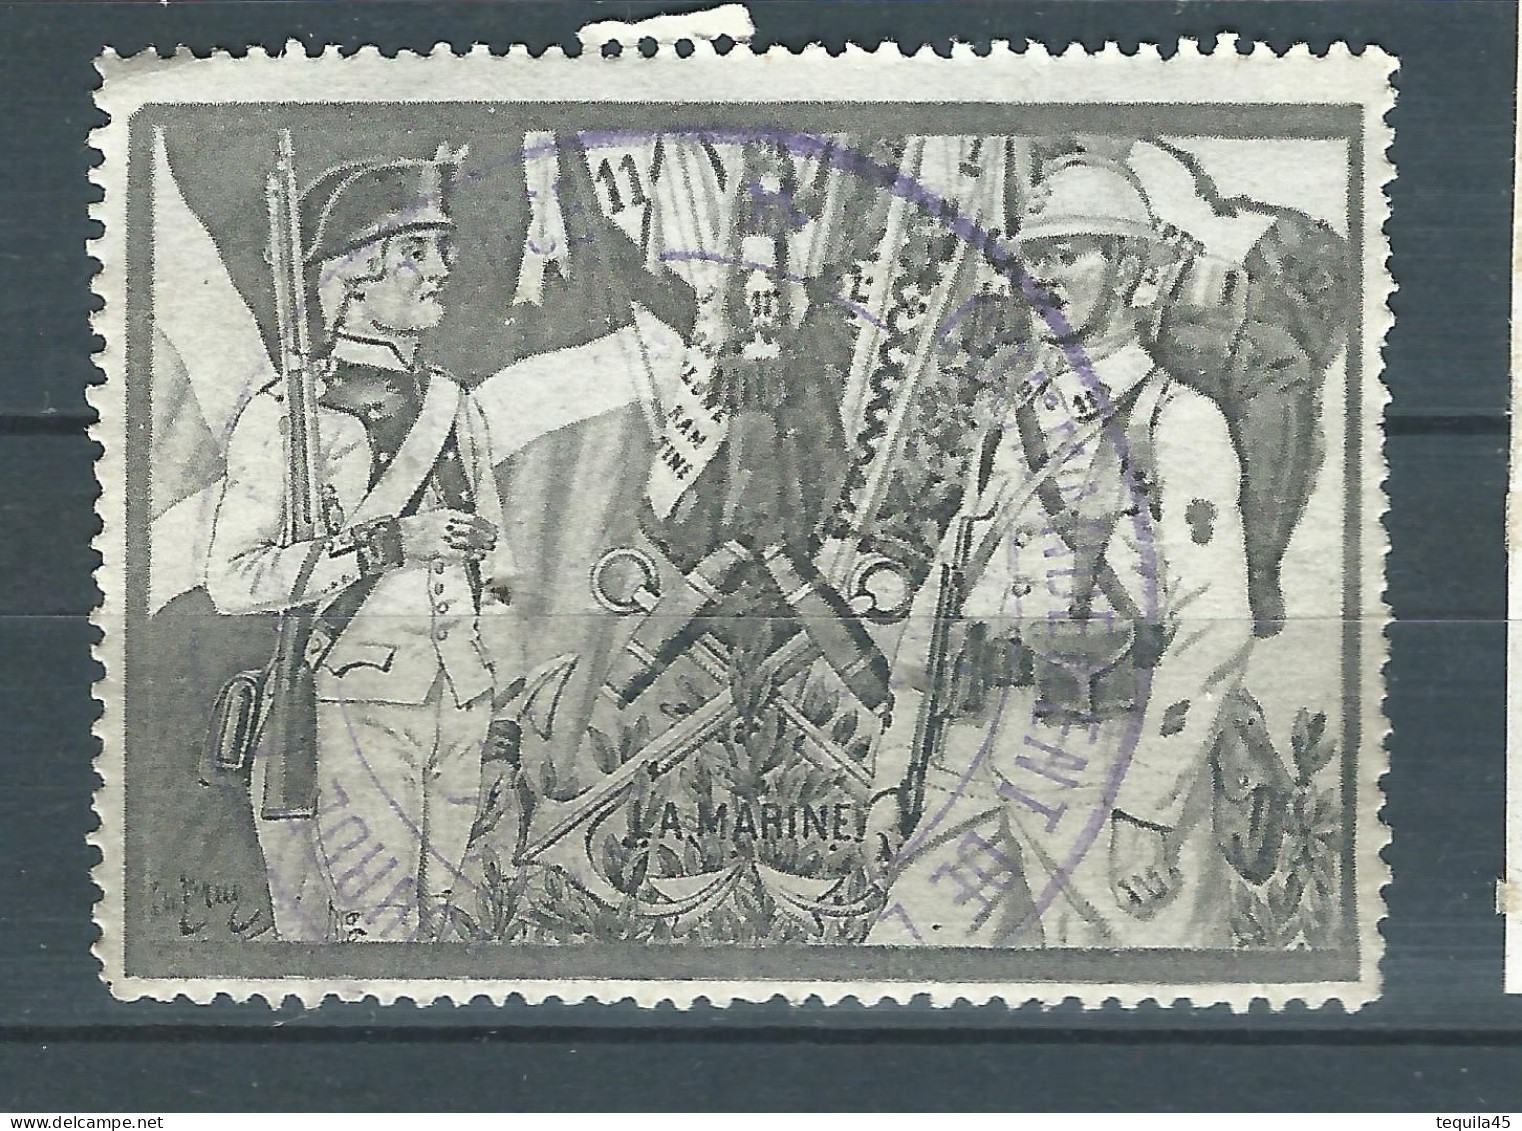 Vignette DELANDRE - France - 11 éme Régiment Infanterie - 1914 -18 WWI WW1 Poster Stamp - Erinnophilie